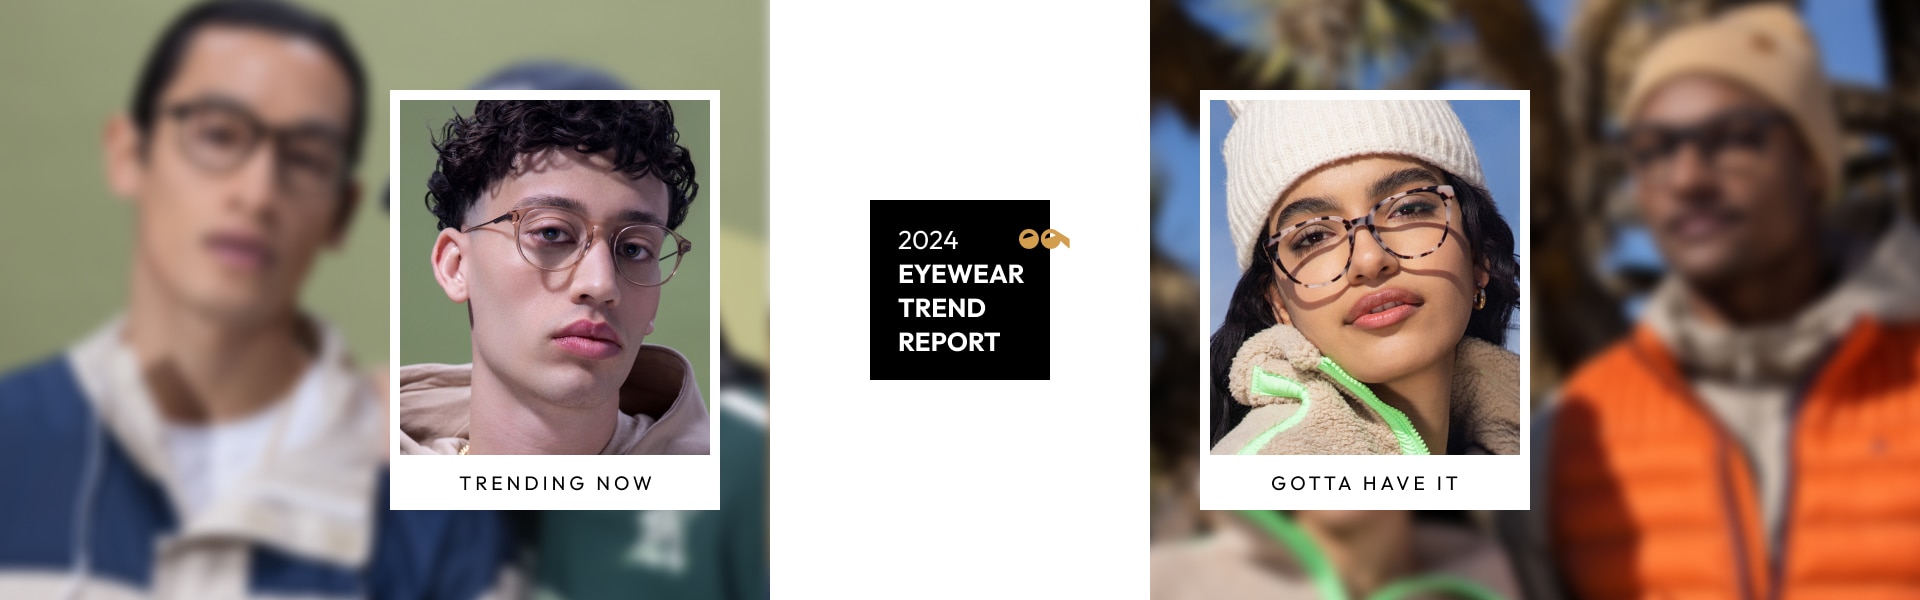 2024 EYEWEAR TREND REPORT